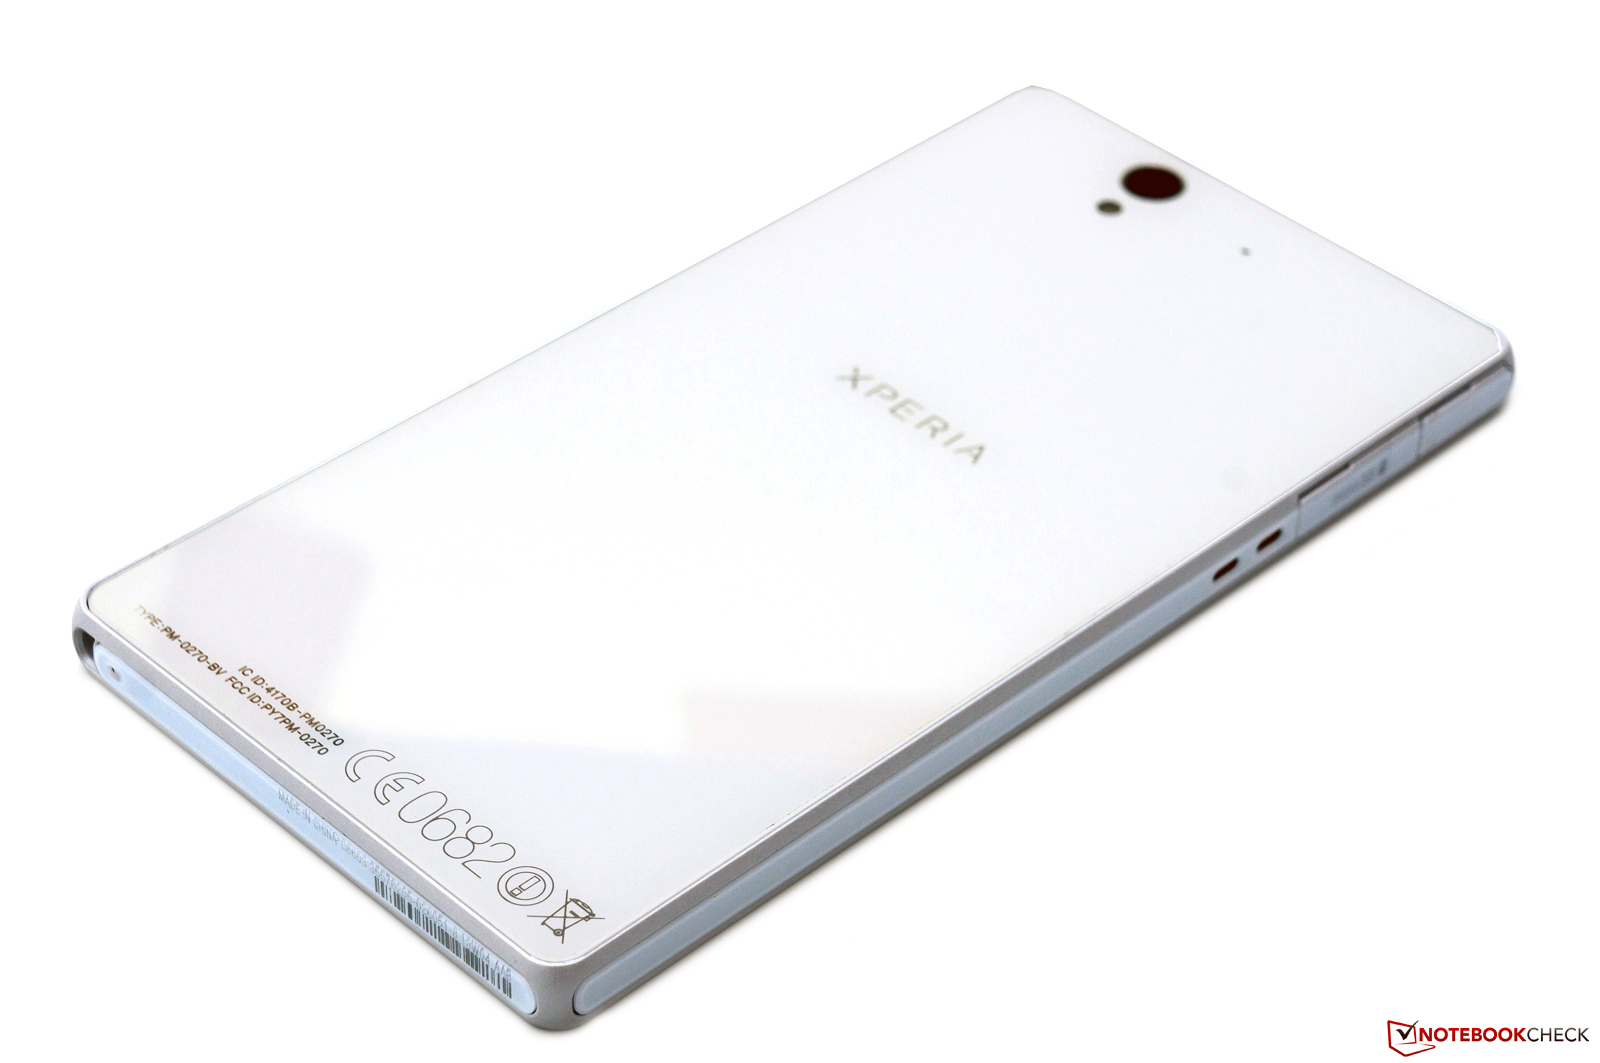 strap Shabby equation Review Sony Xperia Z Smartphone - NotebookCheck.net Reviews